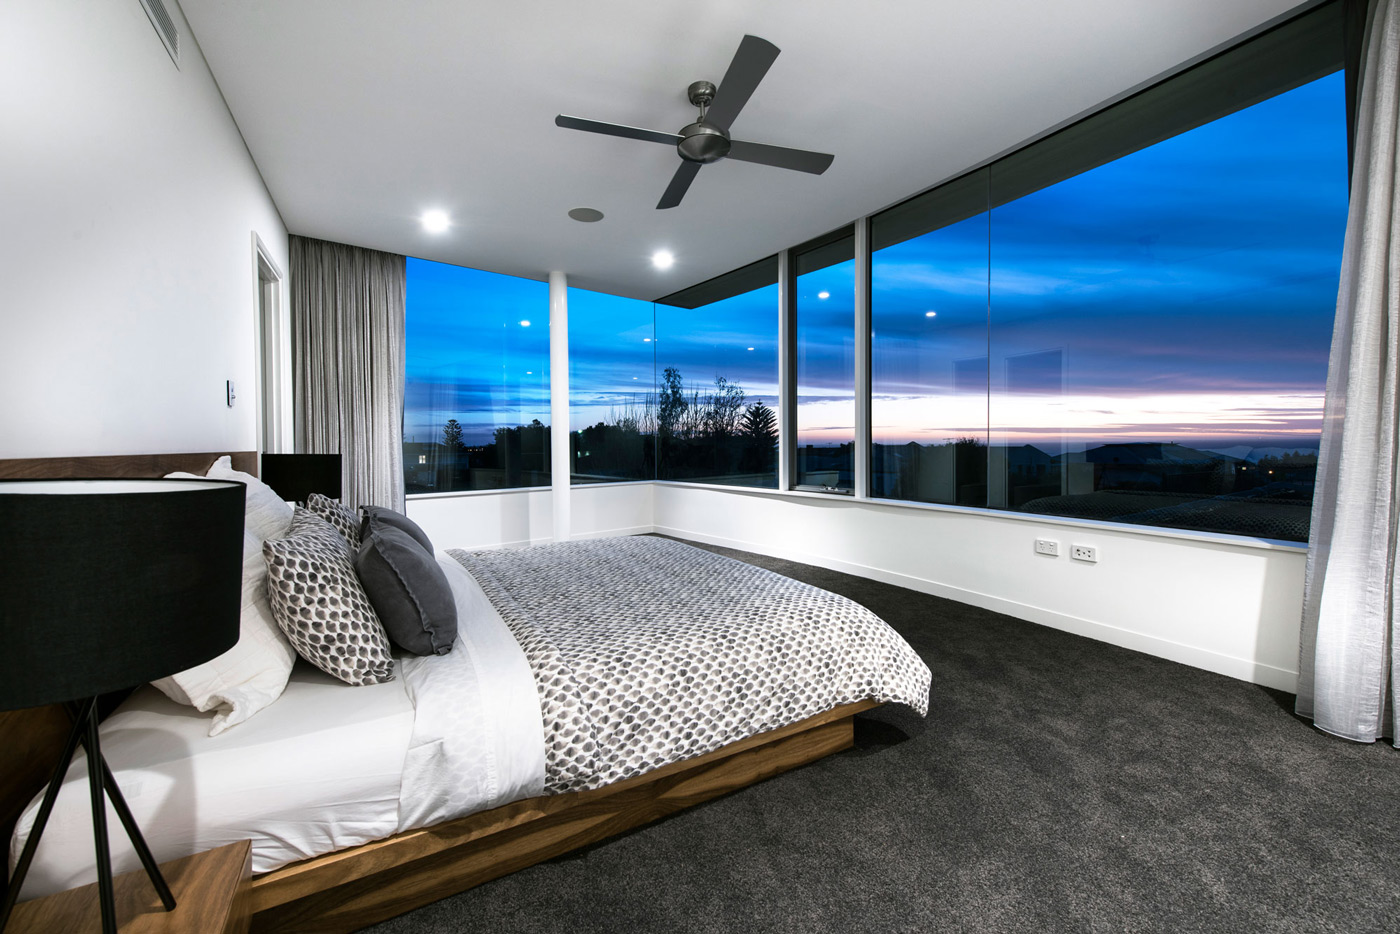 beach bedroom master modern glass perth residence city luxury walls australia minimalist resort australian features expansive room cantilevered pool views